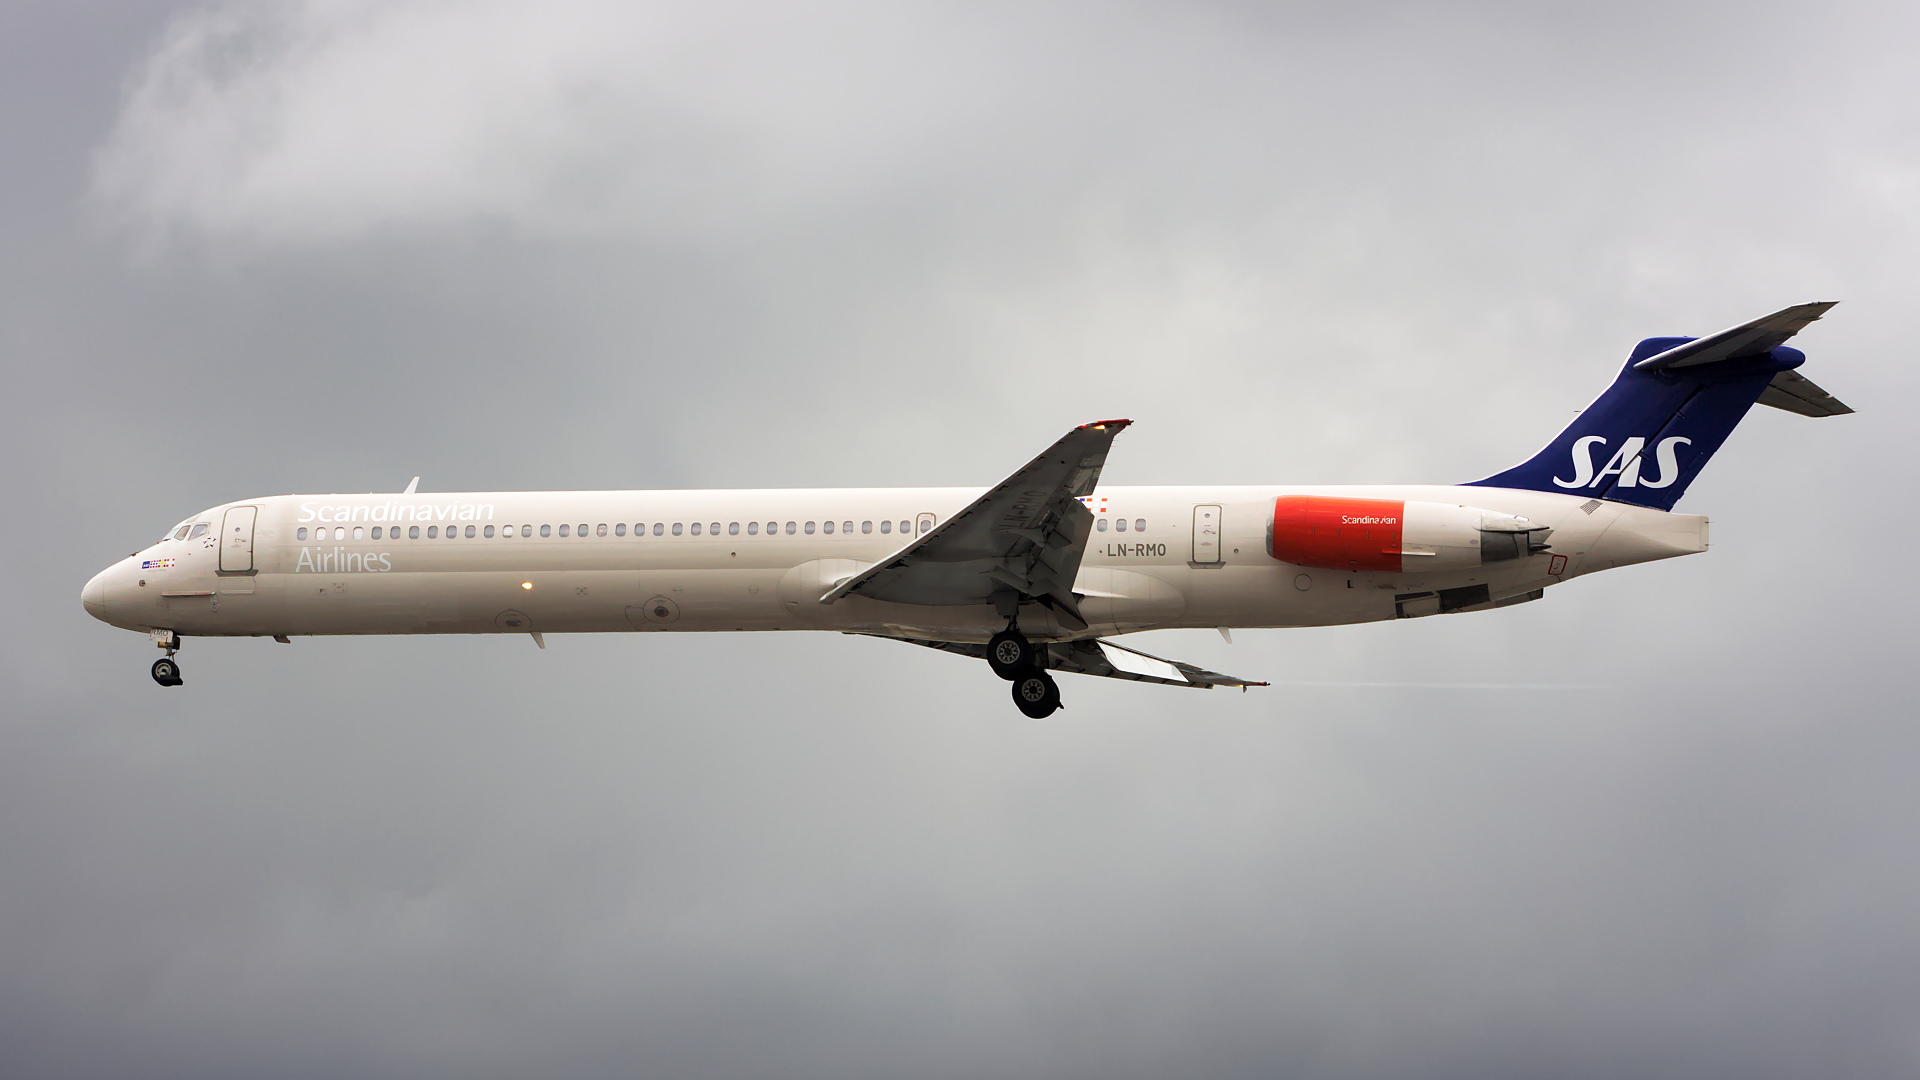 LN-RMO ✈ Scandinavian Airlines McDonnell Douglas MD-82 @ London-Heathrow